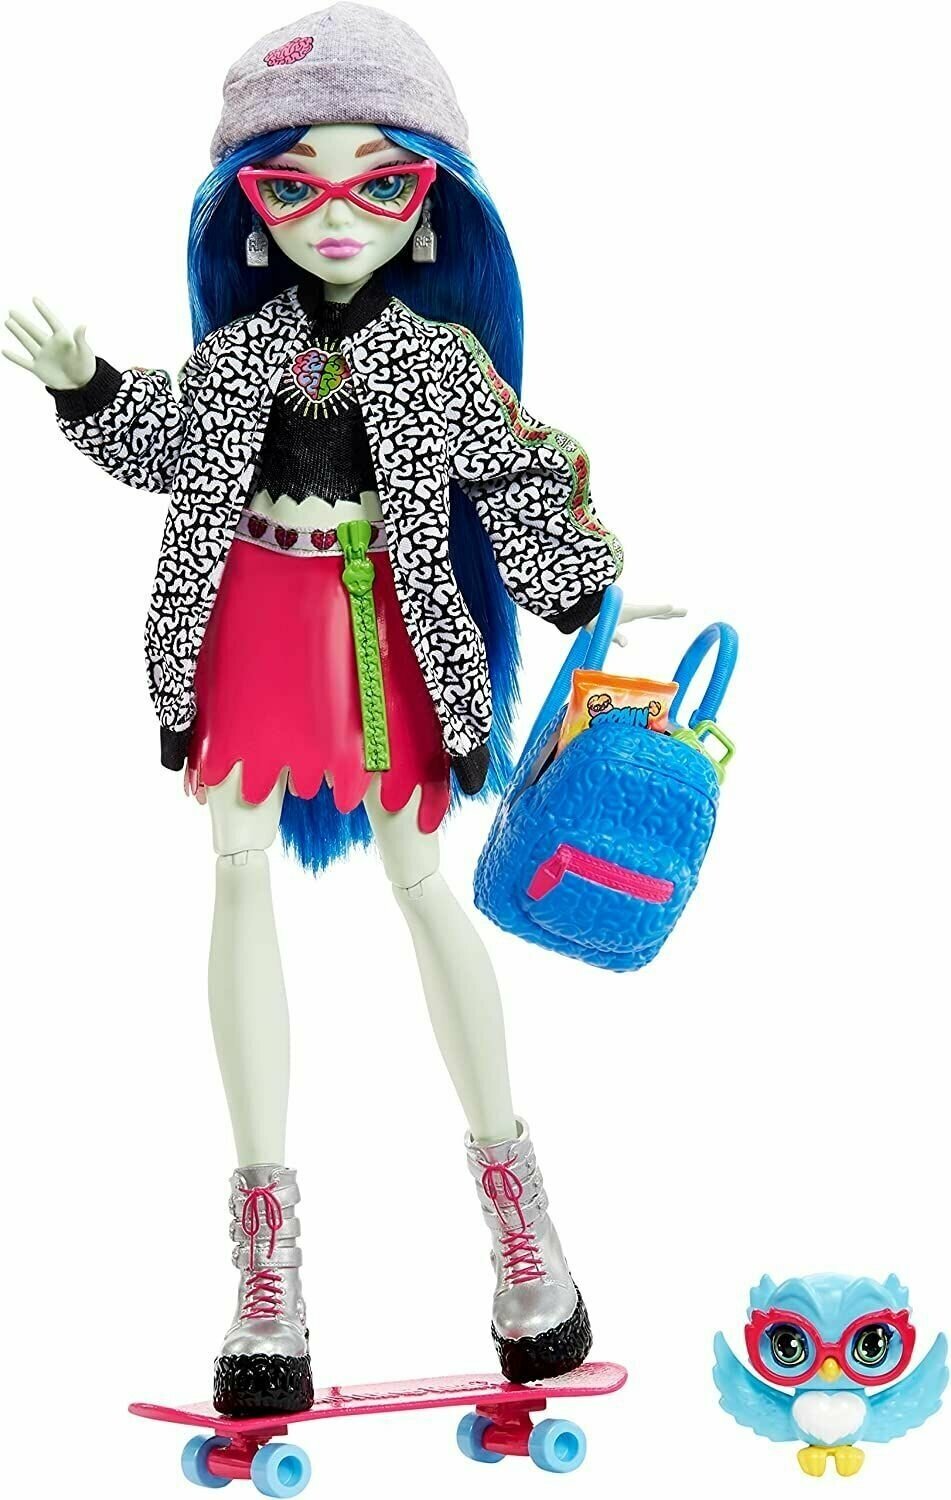 Коллекционная кукла Monster High Ghoulia Yelps Doll with Blue Hair, Pet and Accessories